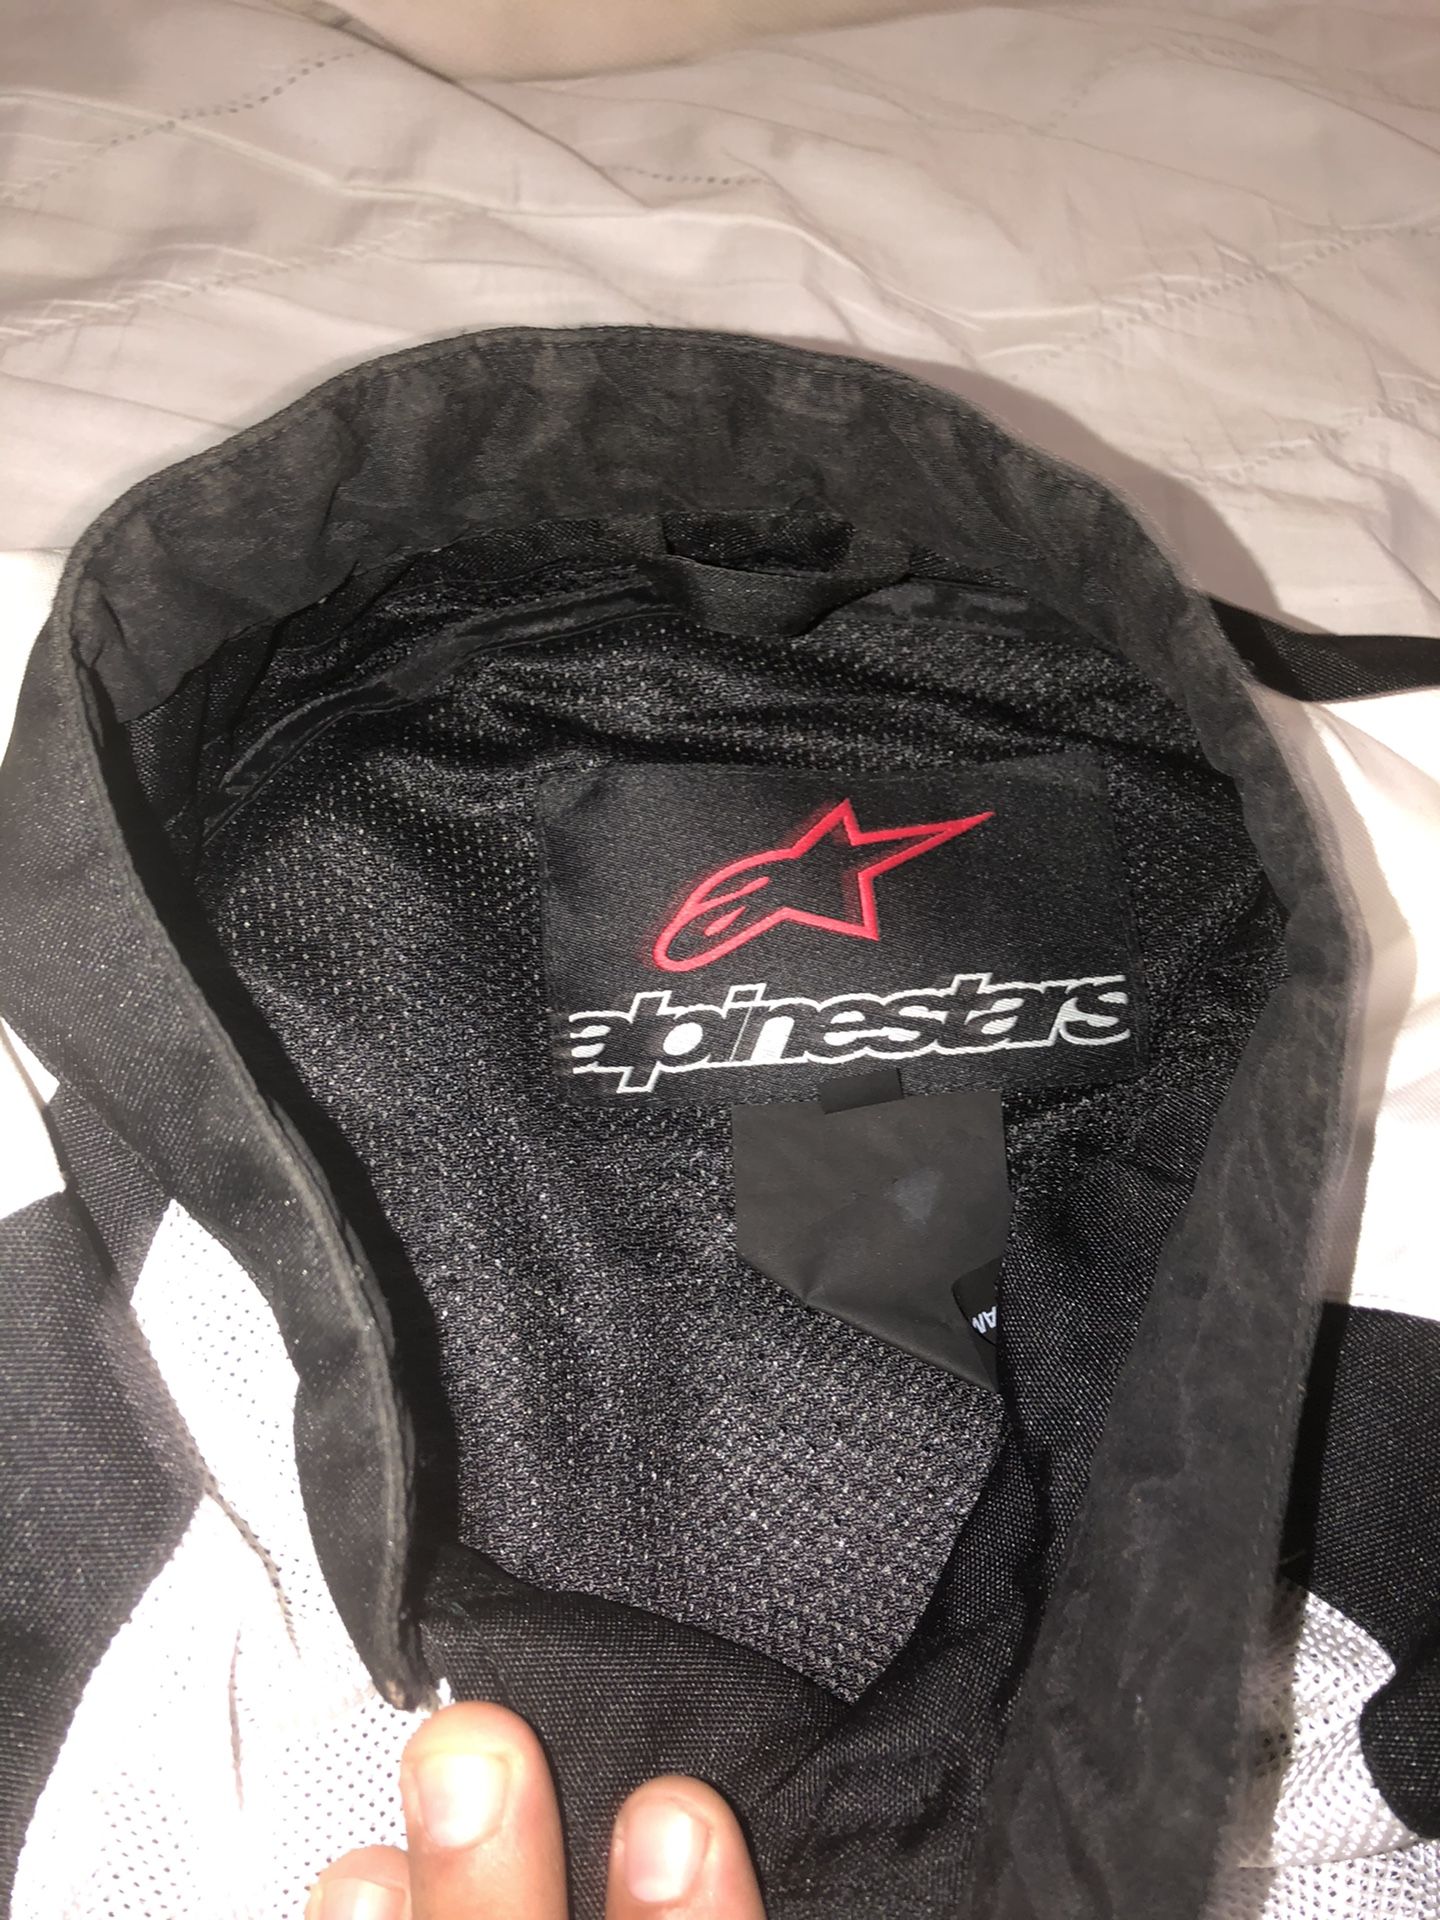 Alpinestar motorcycle jacket with padding